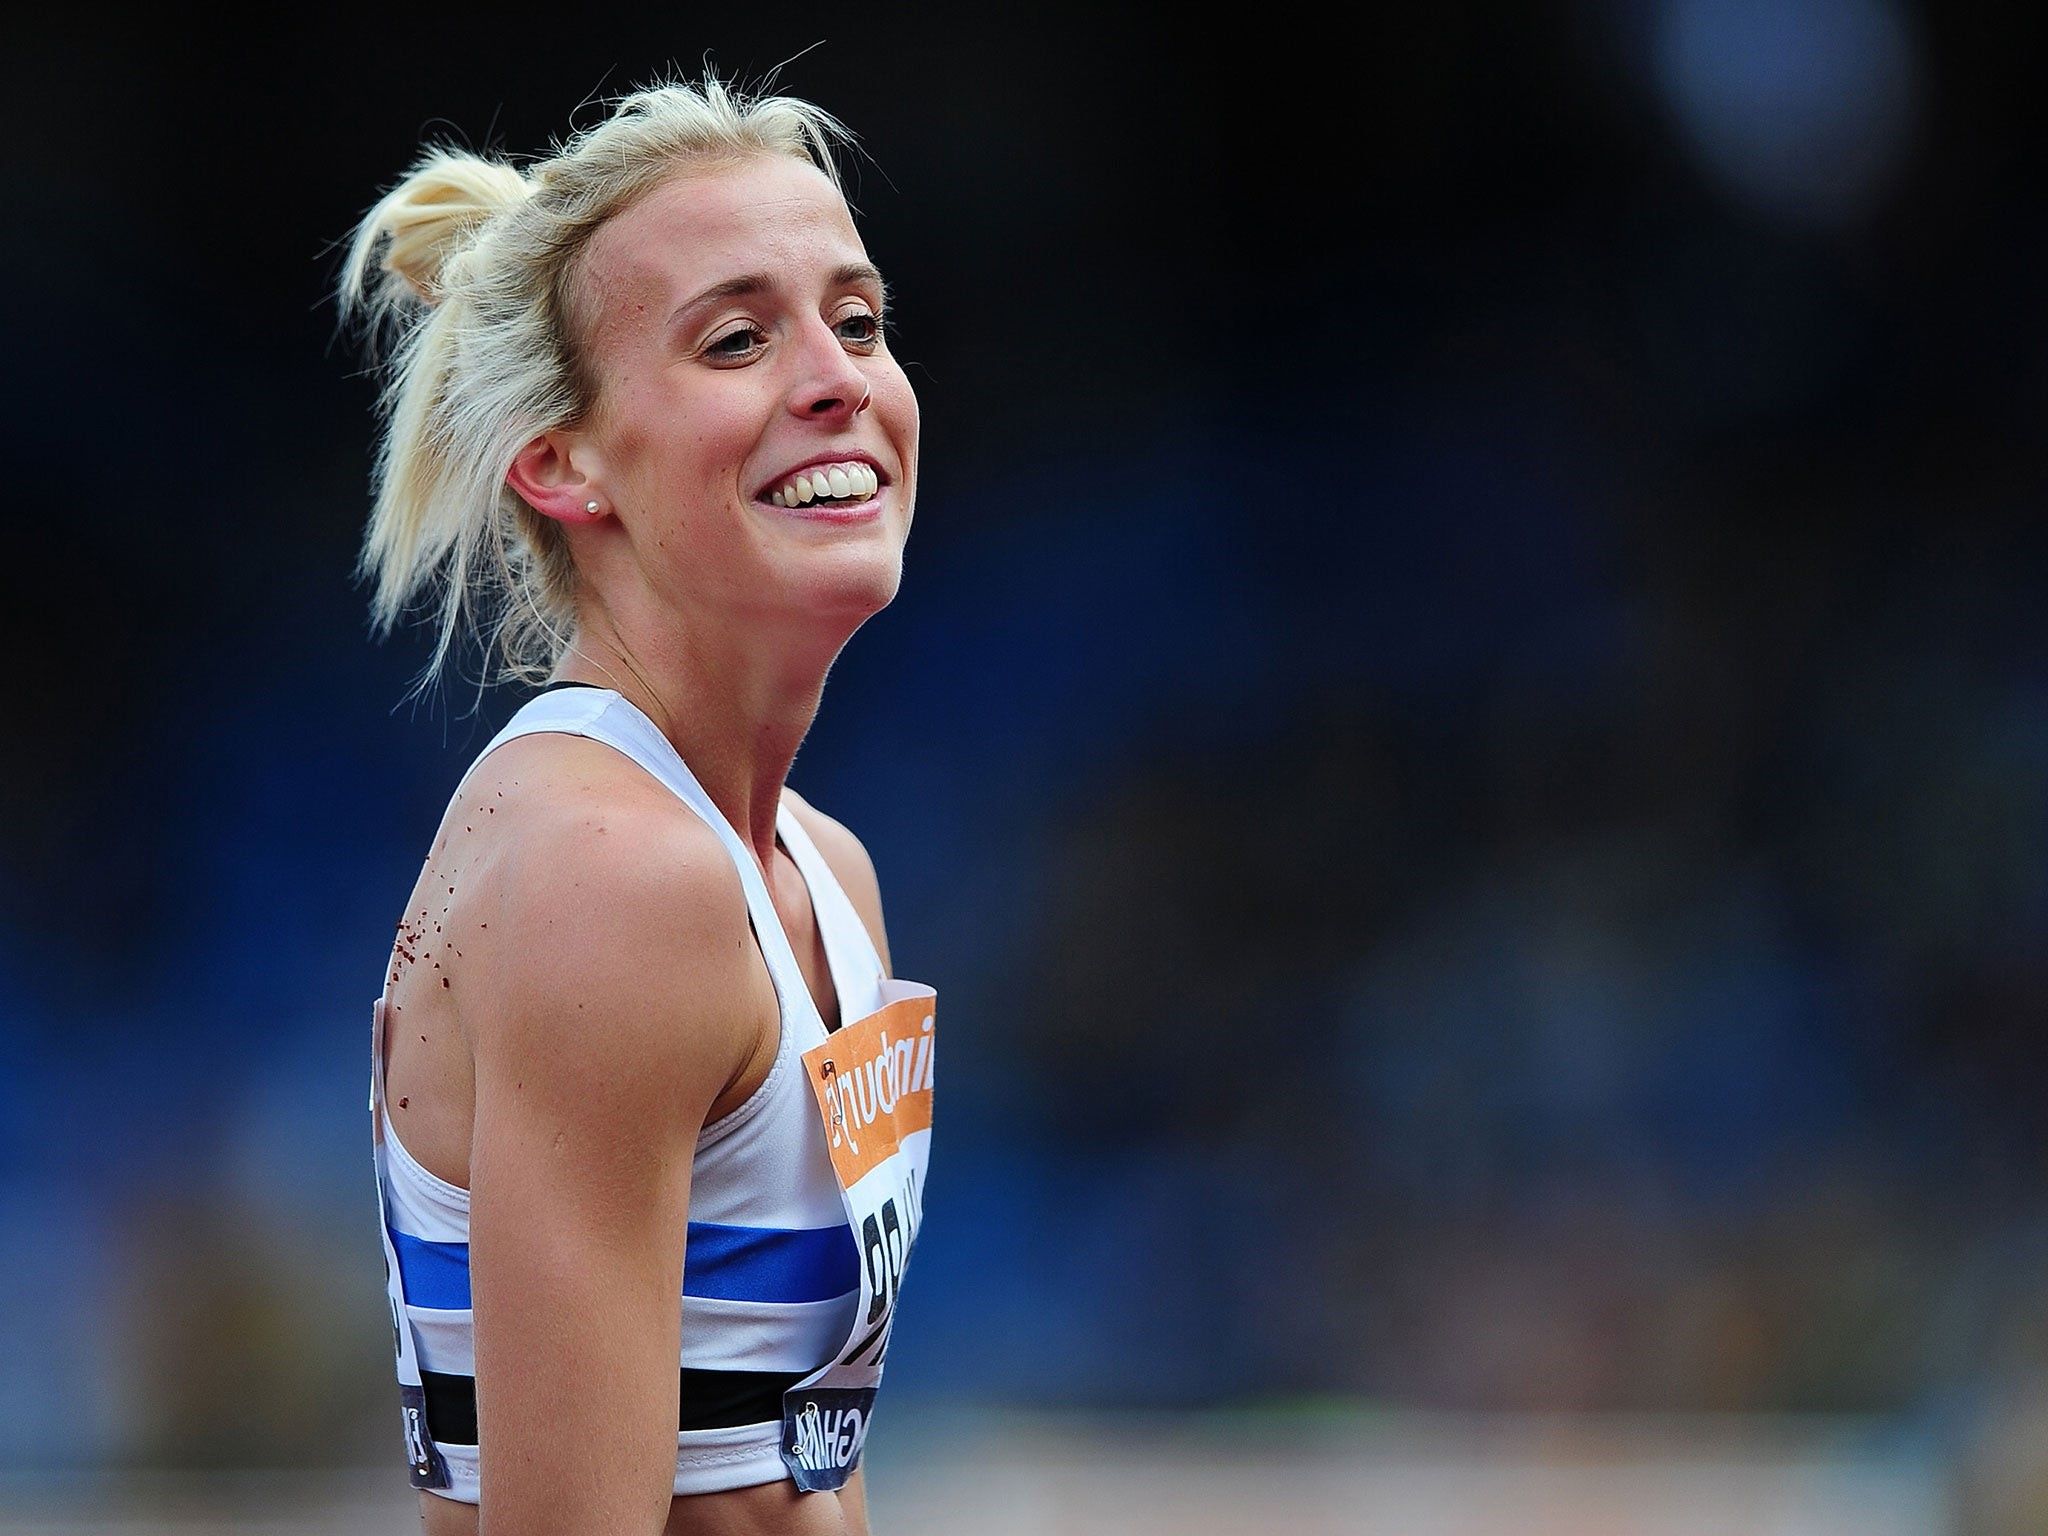 Lynsey Sharp Sets New Scottish Women’s 800m Record